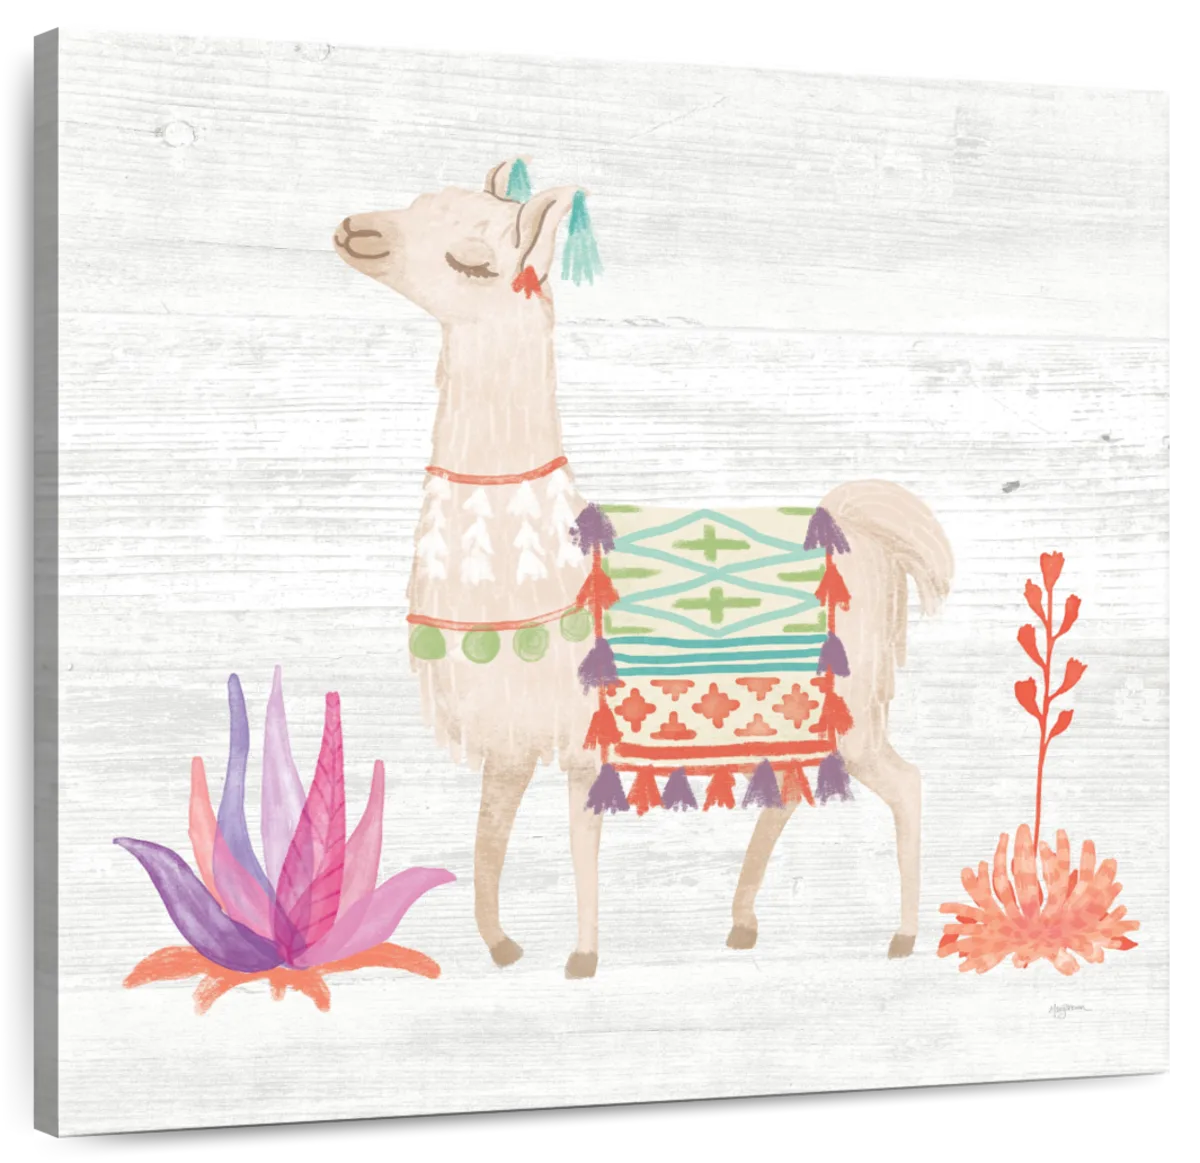 17 Marvellous Llama Gifts For Kids Who Love Llamas